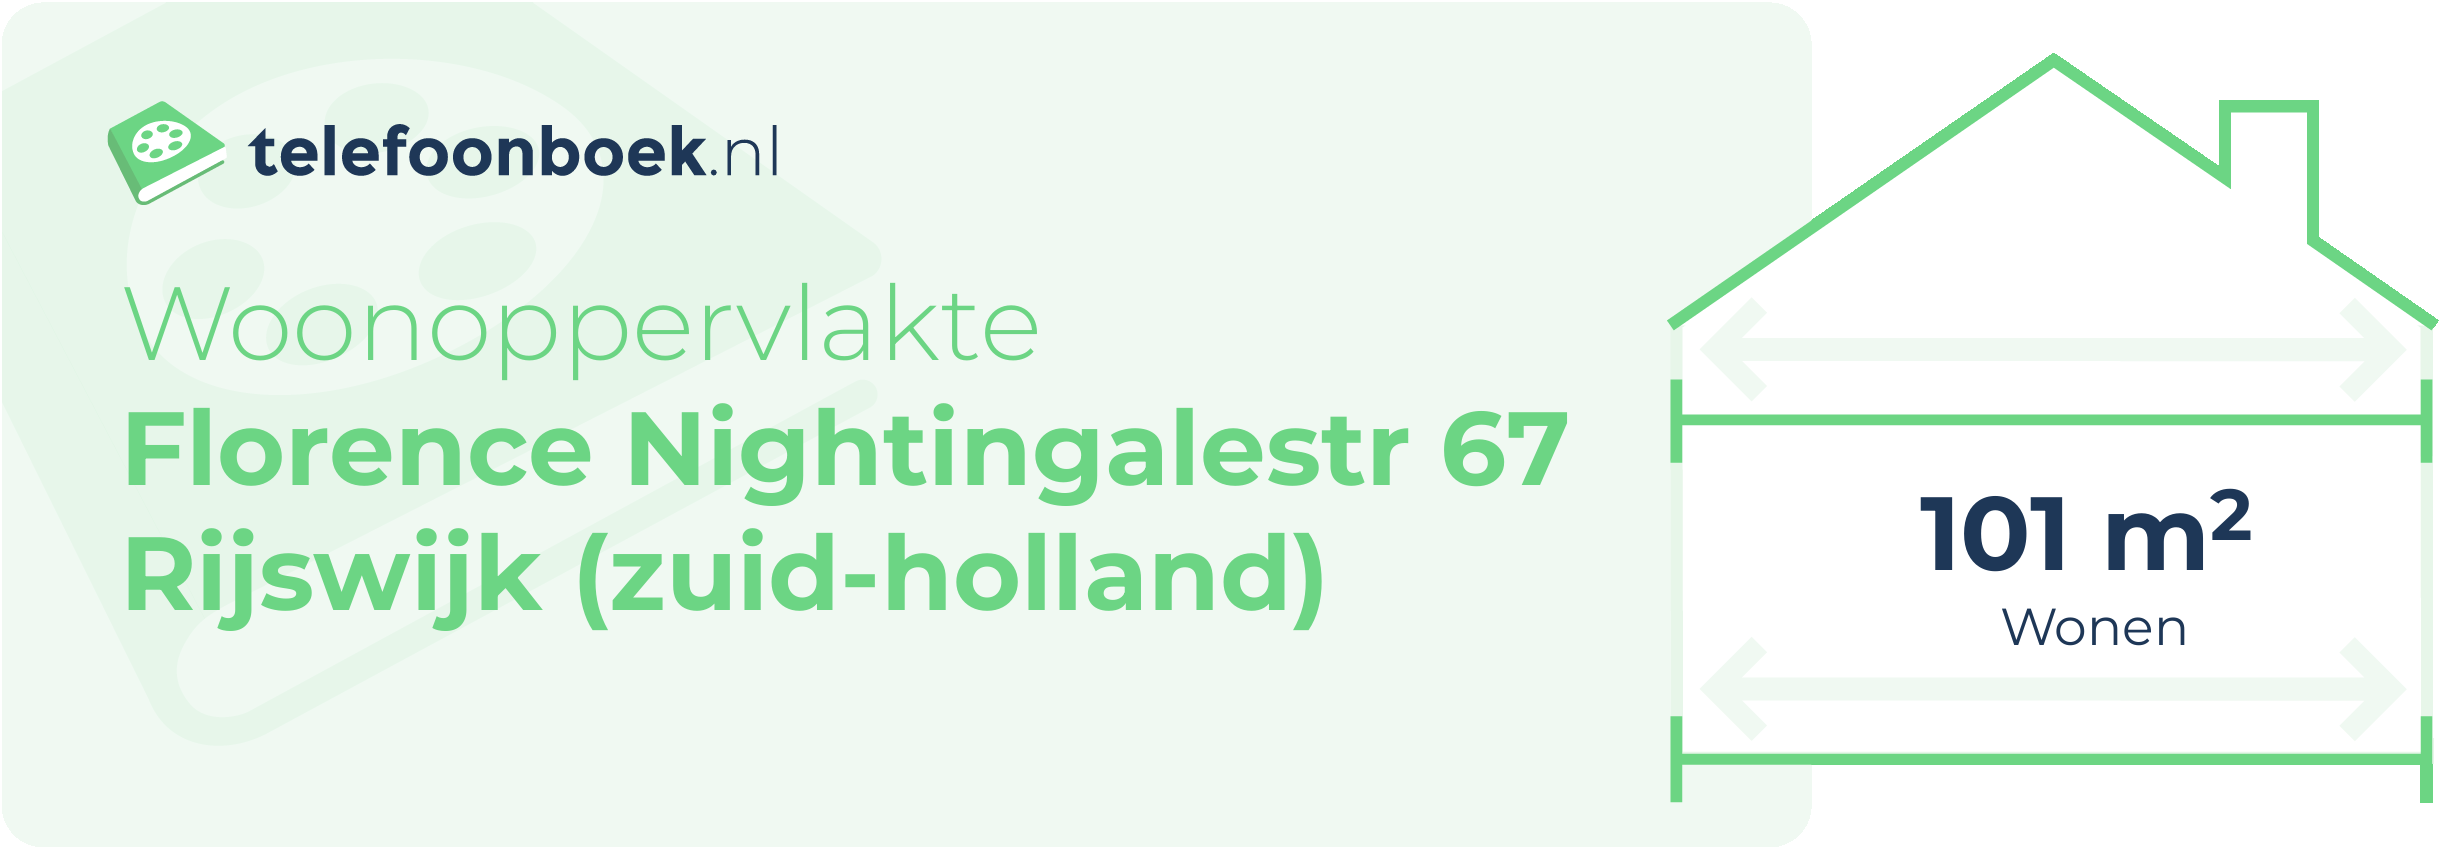 Woonoppervlakte Florence Nightingalestr 67 Rijswijk (Zuid-Holland)